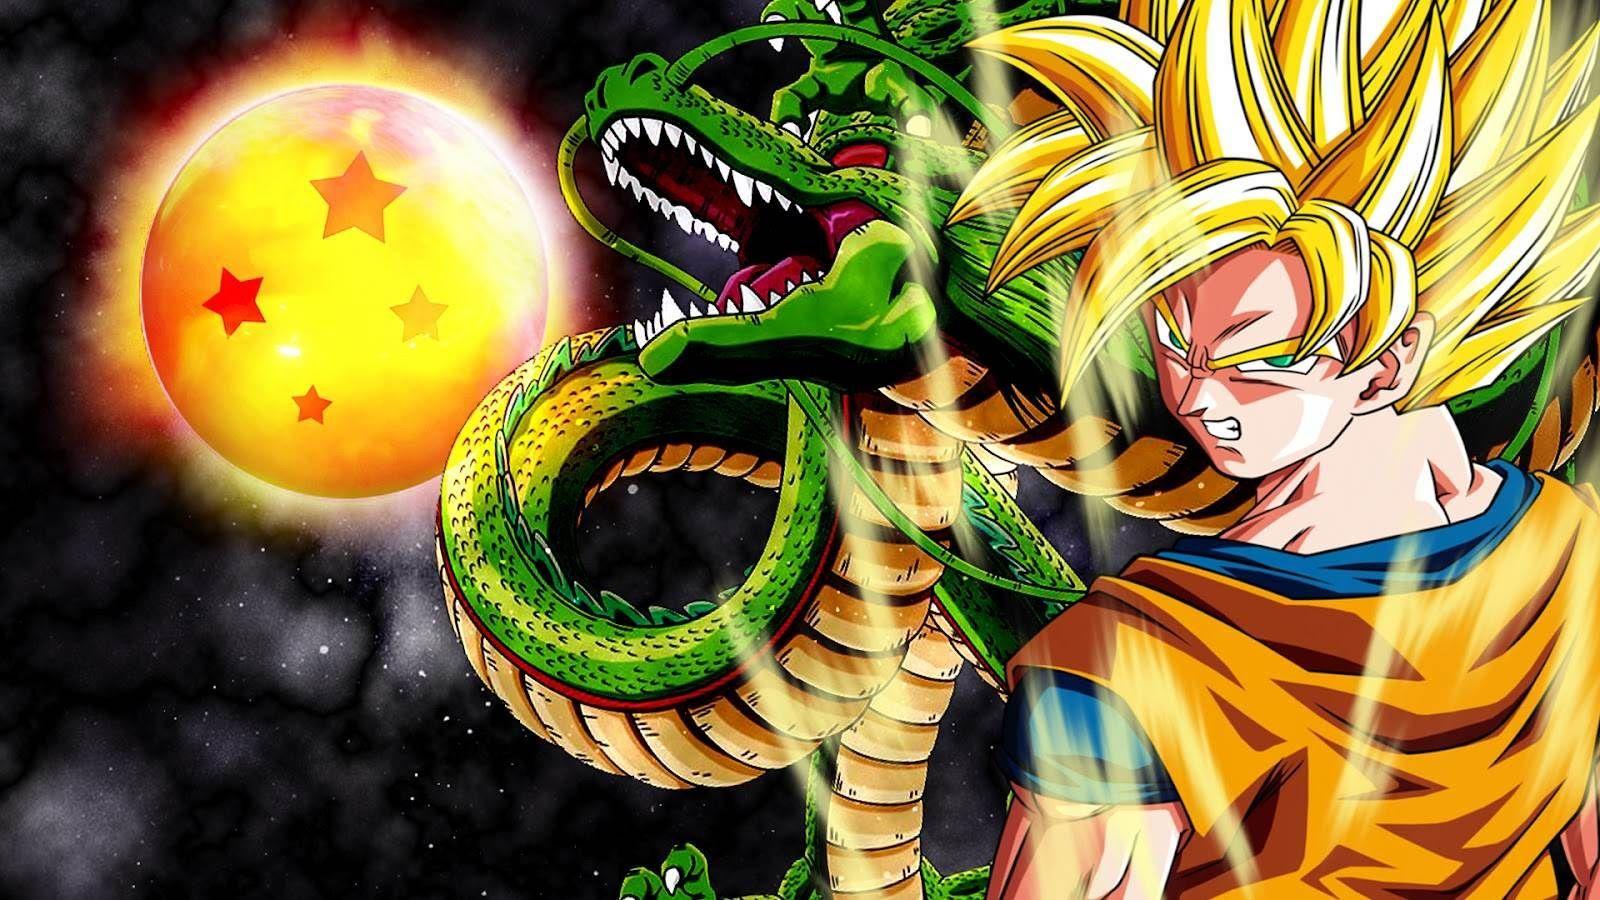 Super Saiyan Goku Art Wallpaper  rDragonballsuper